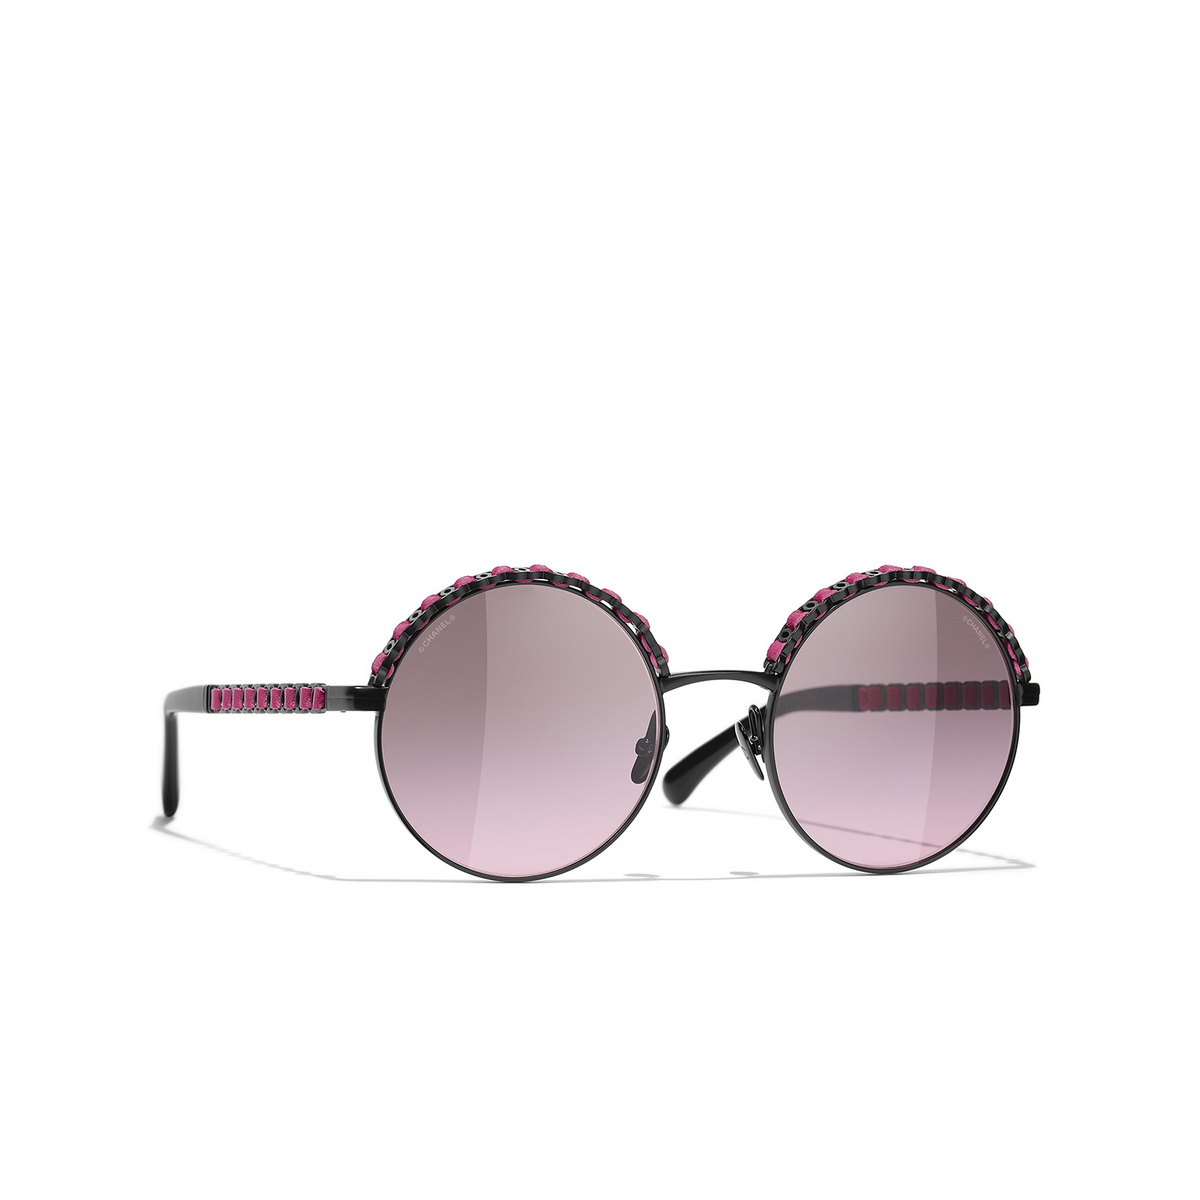 CHANEL round Sunglasses C101S1 Black & Pink - three-quarters view